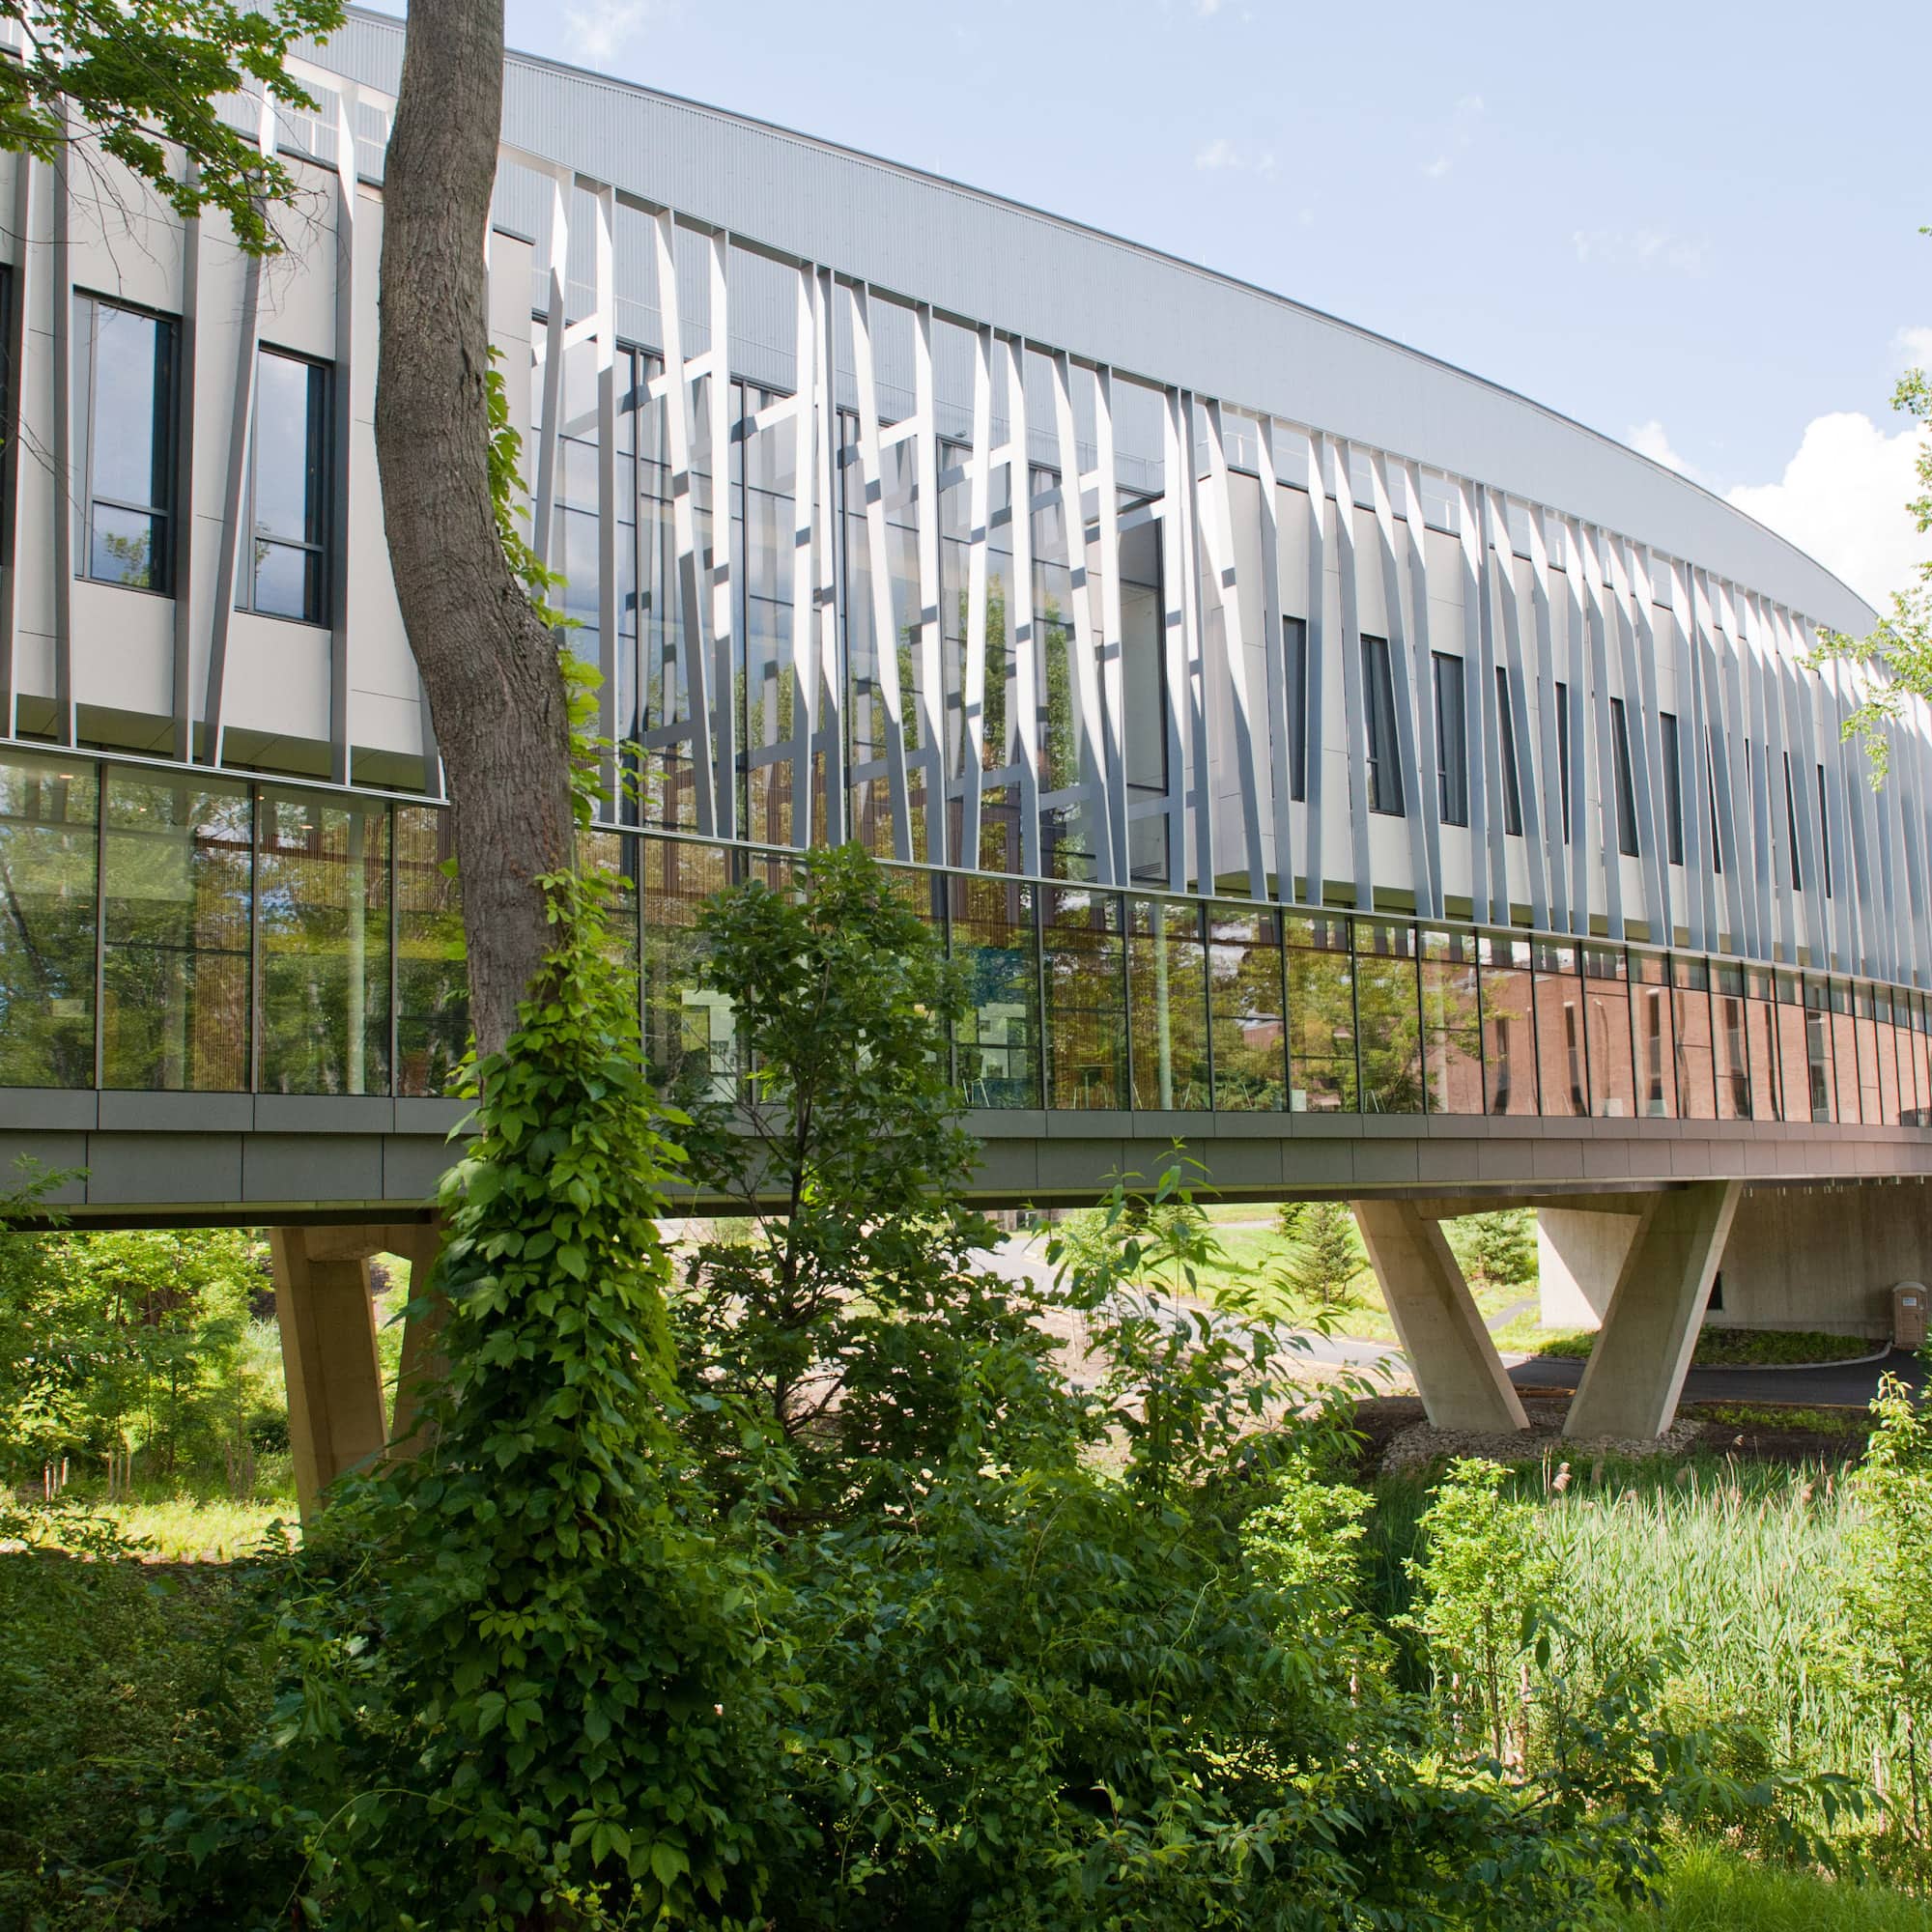 Exterior View of the The Bridge for Laboratory Sciences building on Vassar Campus